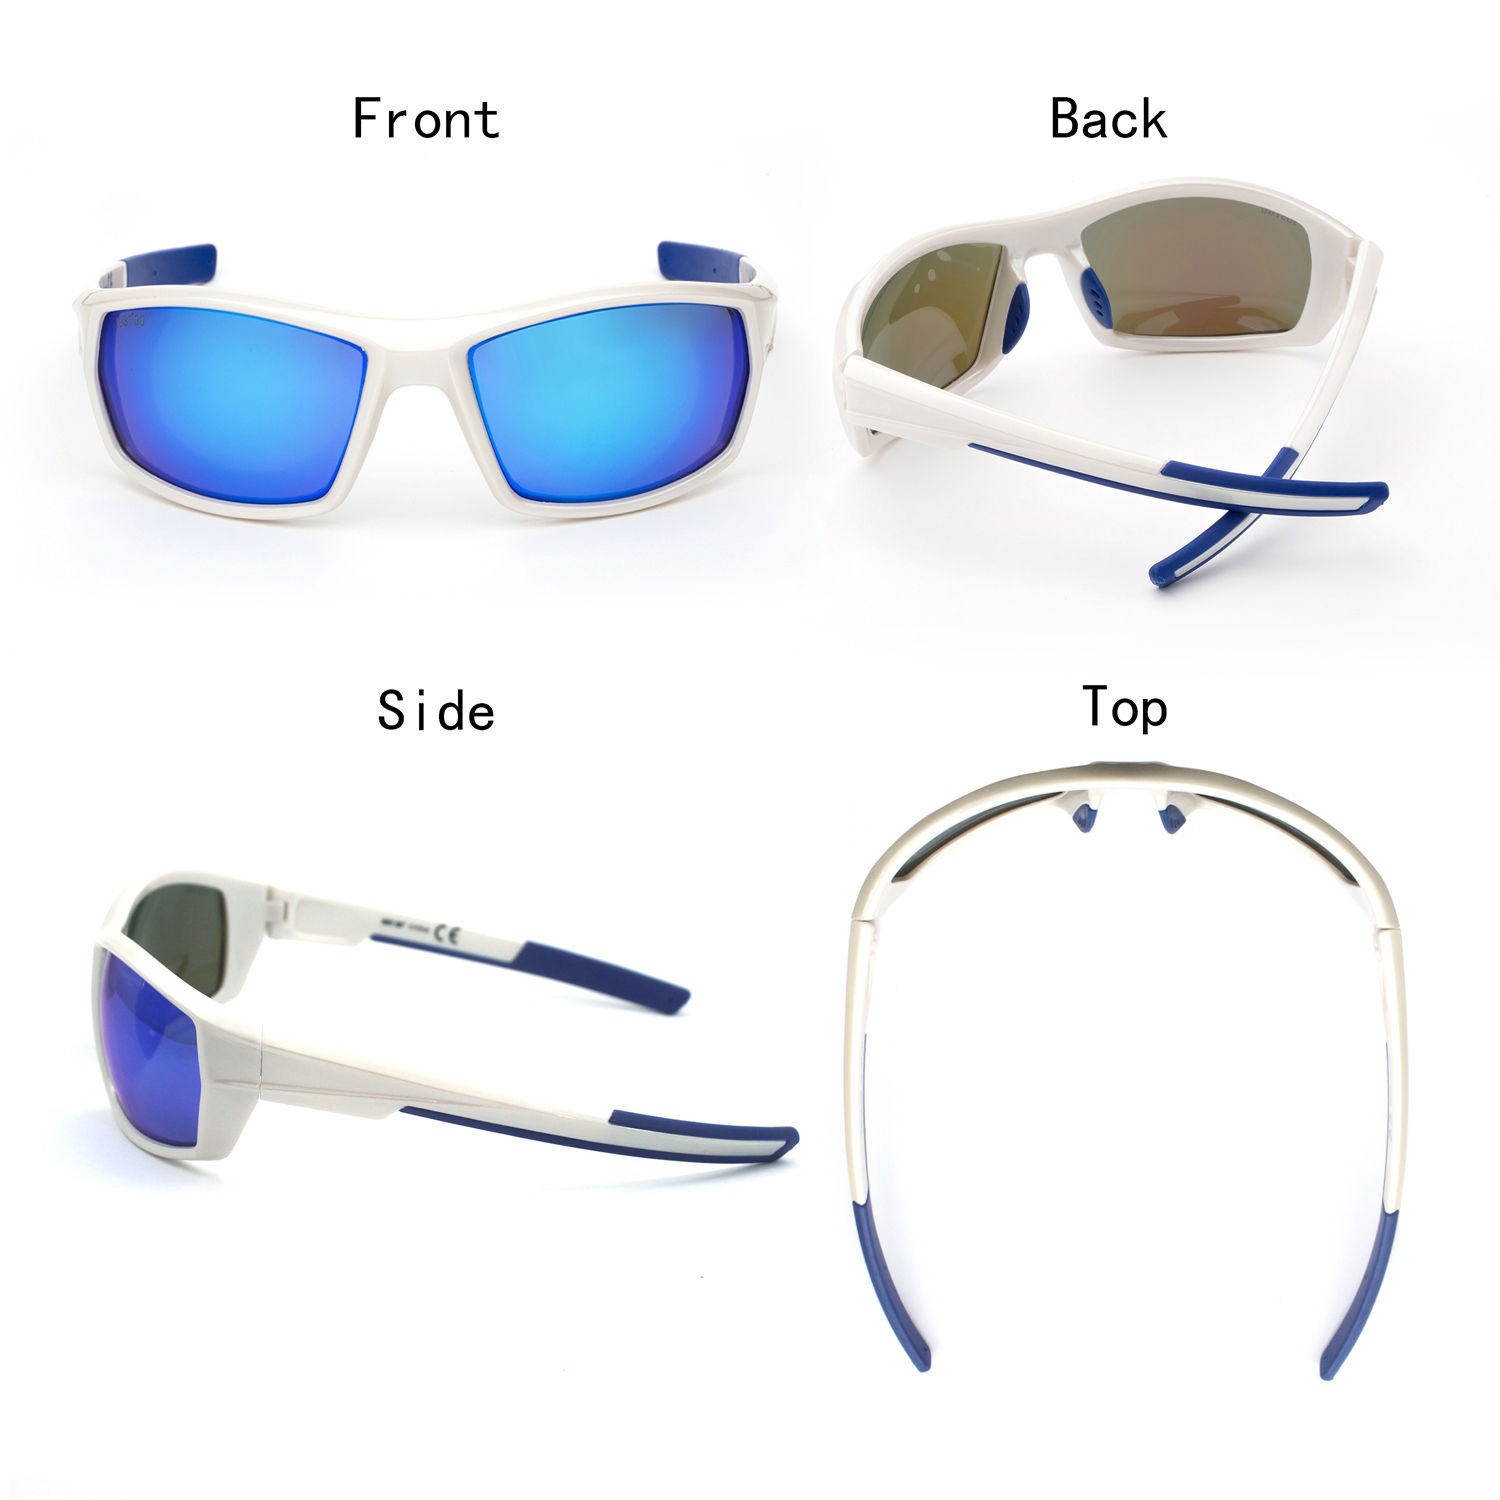 JUST GO Men's Polarized Lens Sports Sunglasses for Cycling Riding Baseball Running Golf, White, Revo Blue - image 4 of 7